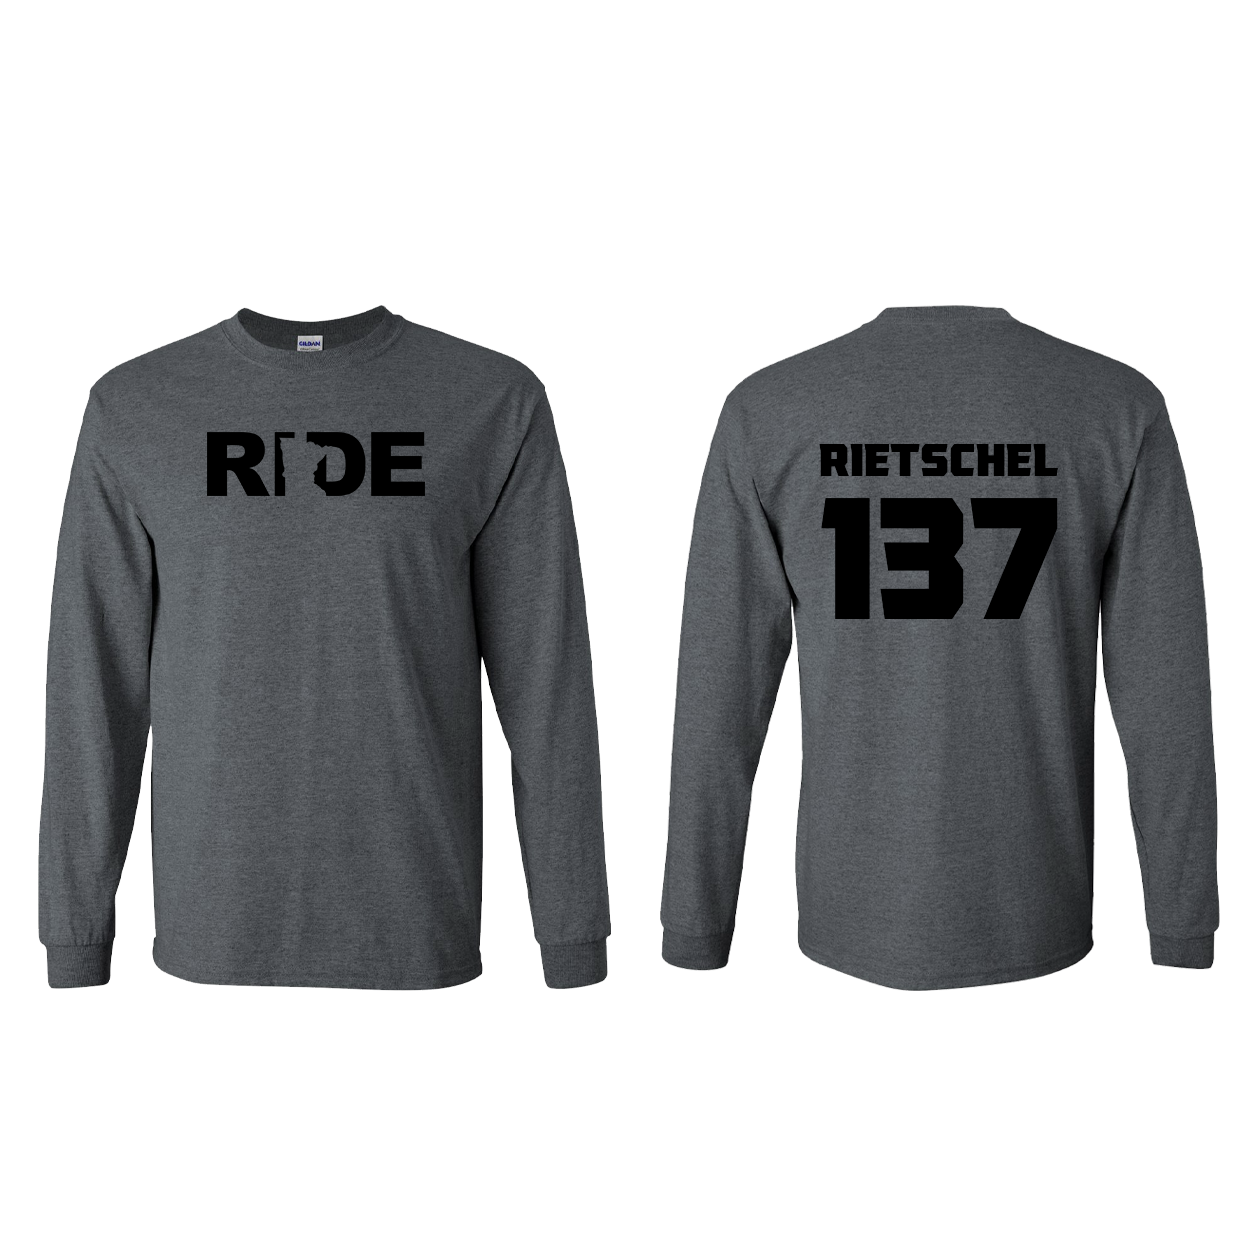 FXR BMX Race Team Classic Athlete Support Long Sleeve Shirt C. RIETSCHEL #137 Dark Heather (Black Logo)